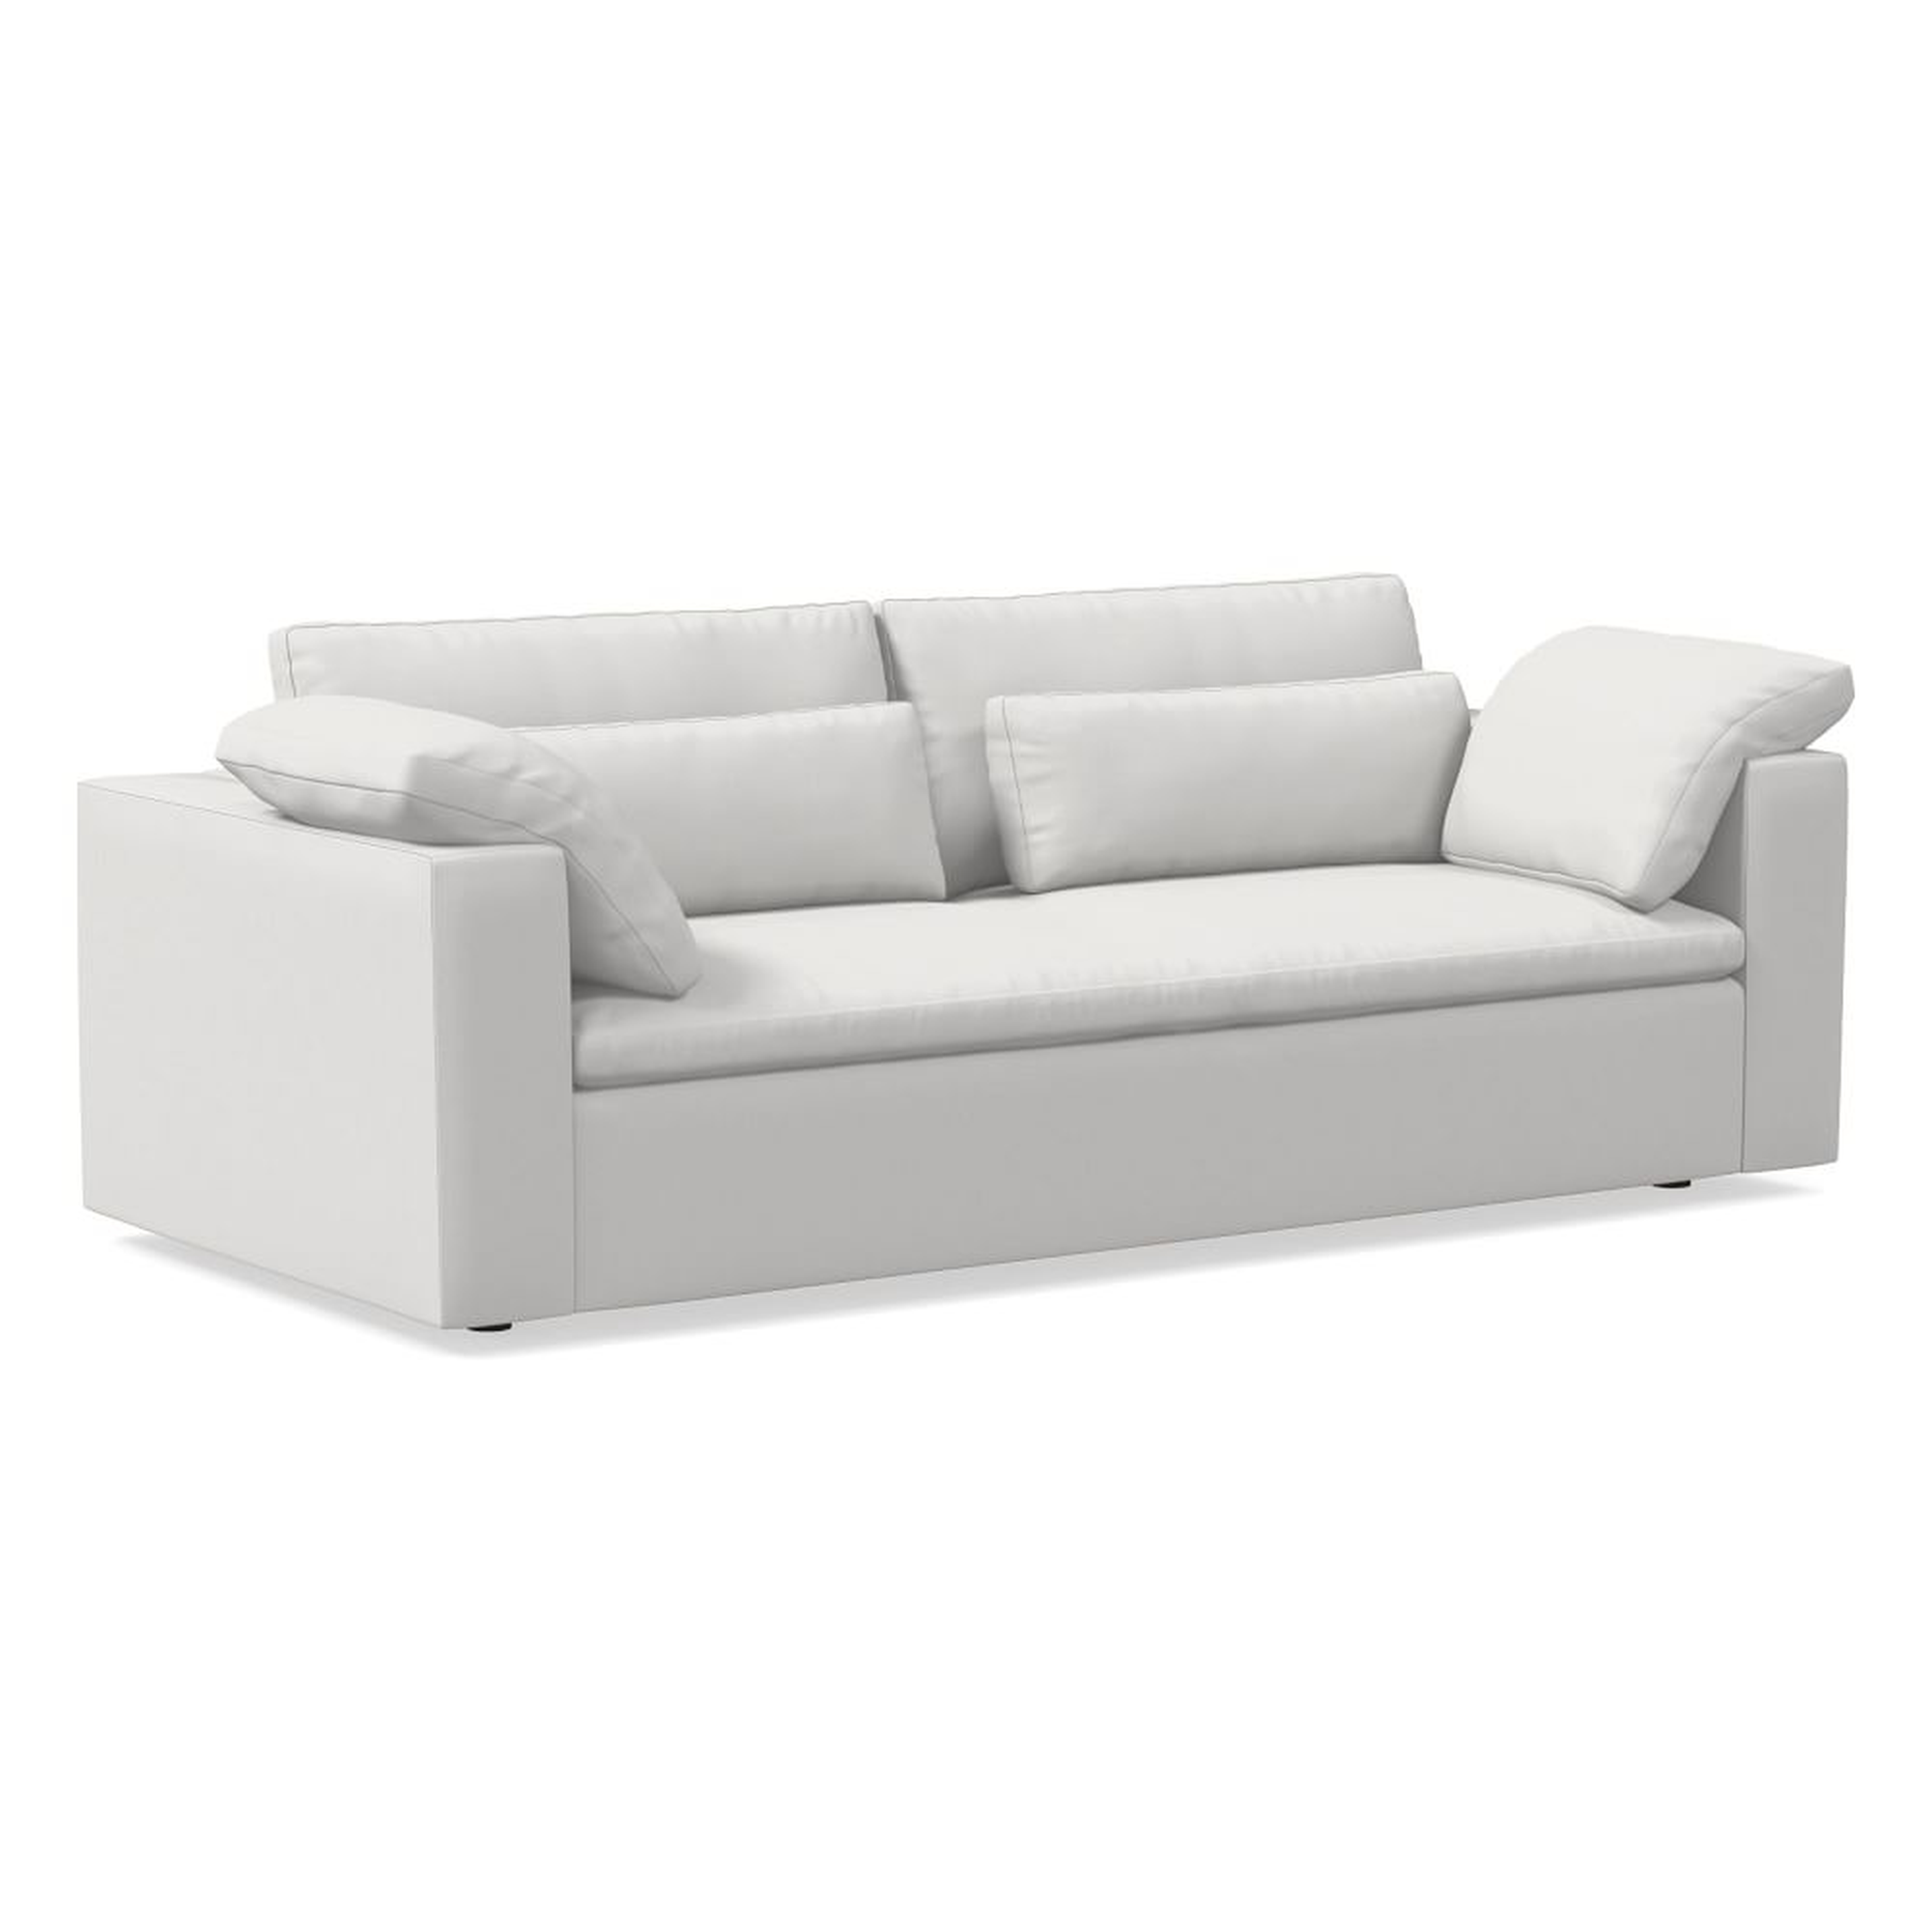 Harmony Modular 92" Bench Cushion Sofa, Standard Depth, Performance Washed Canvas, White - West Elm